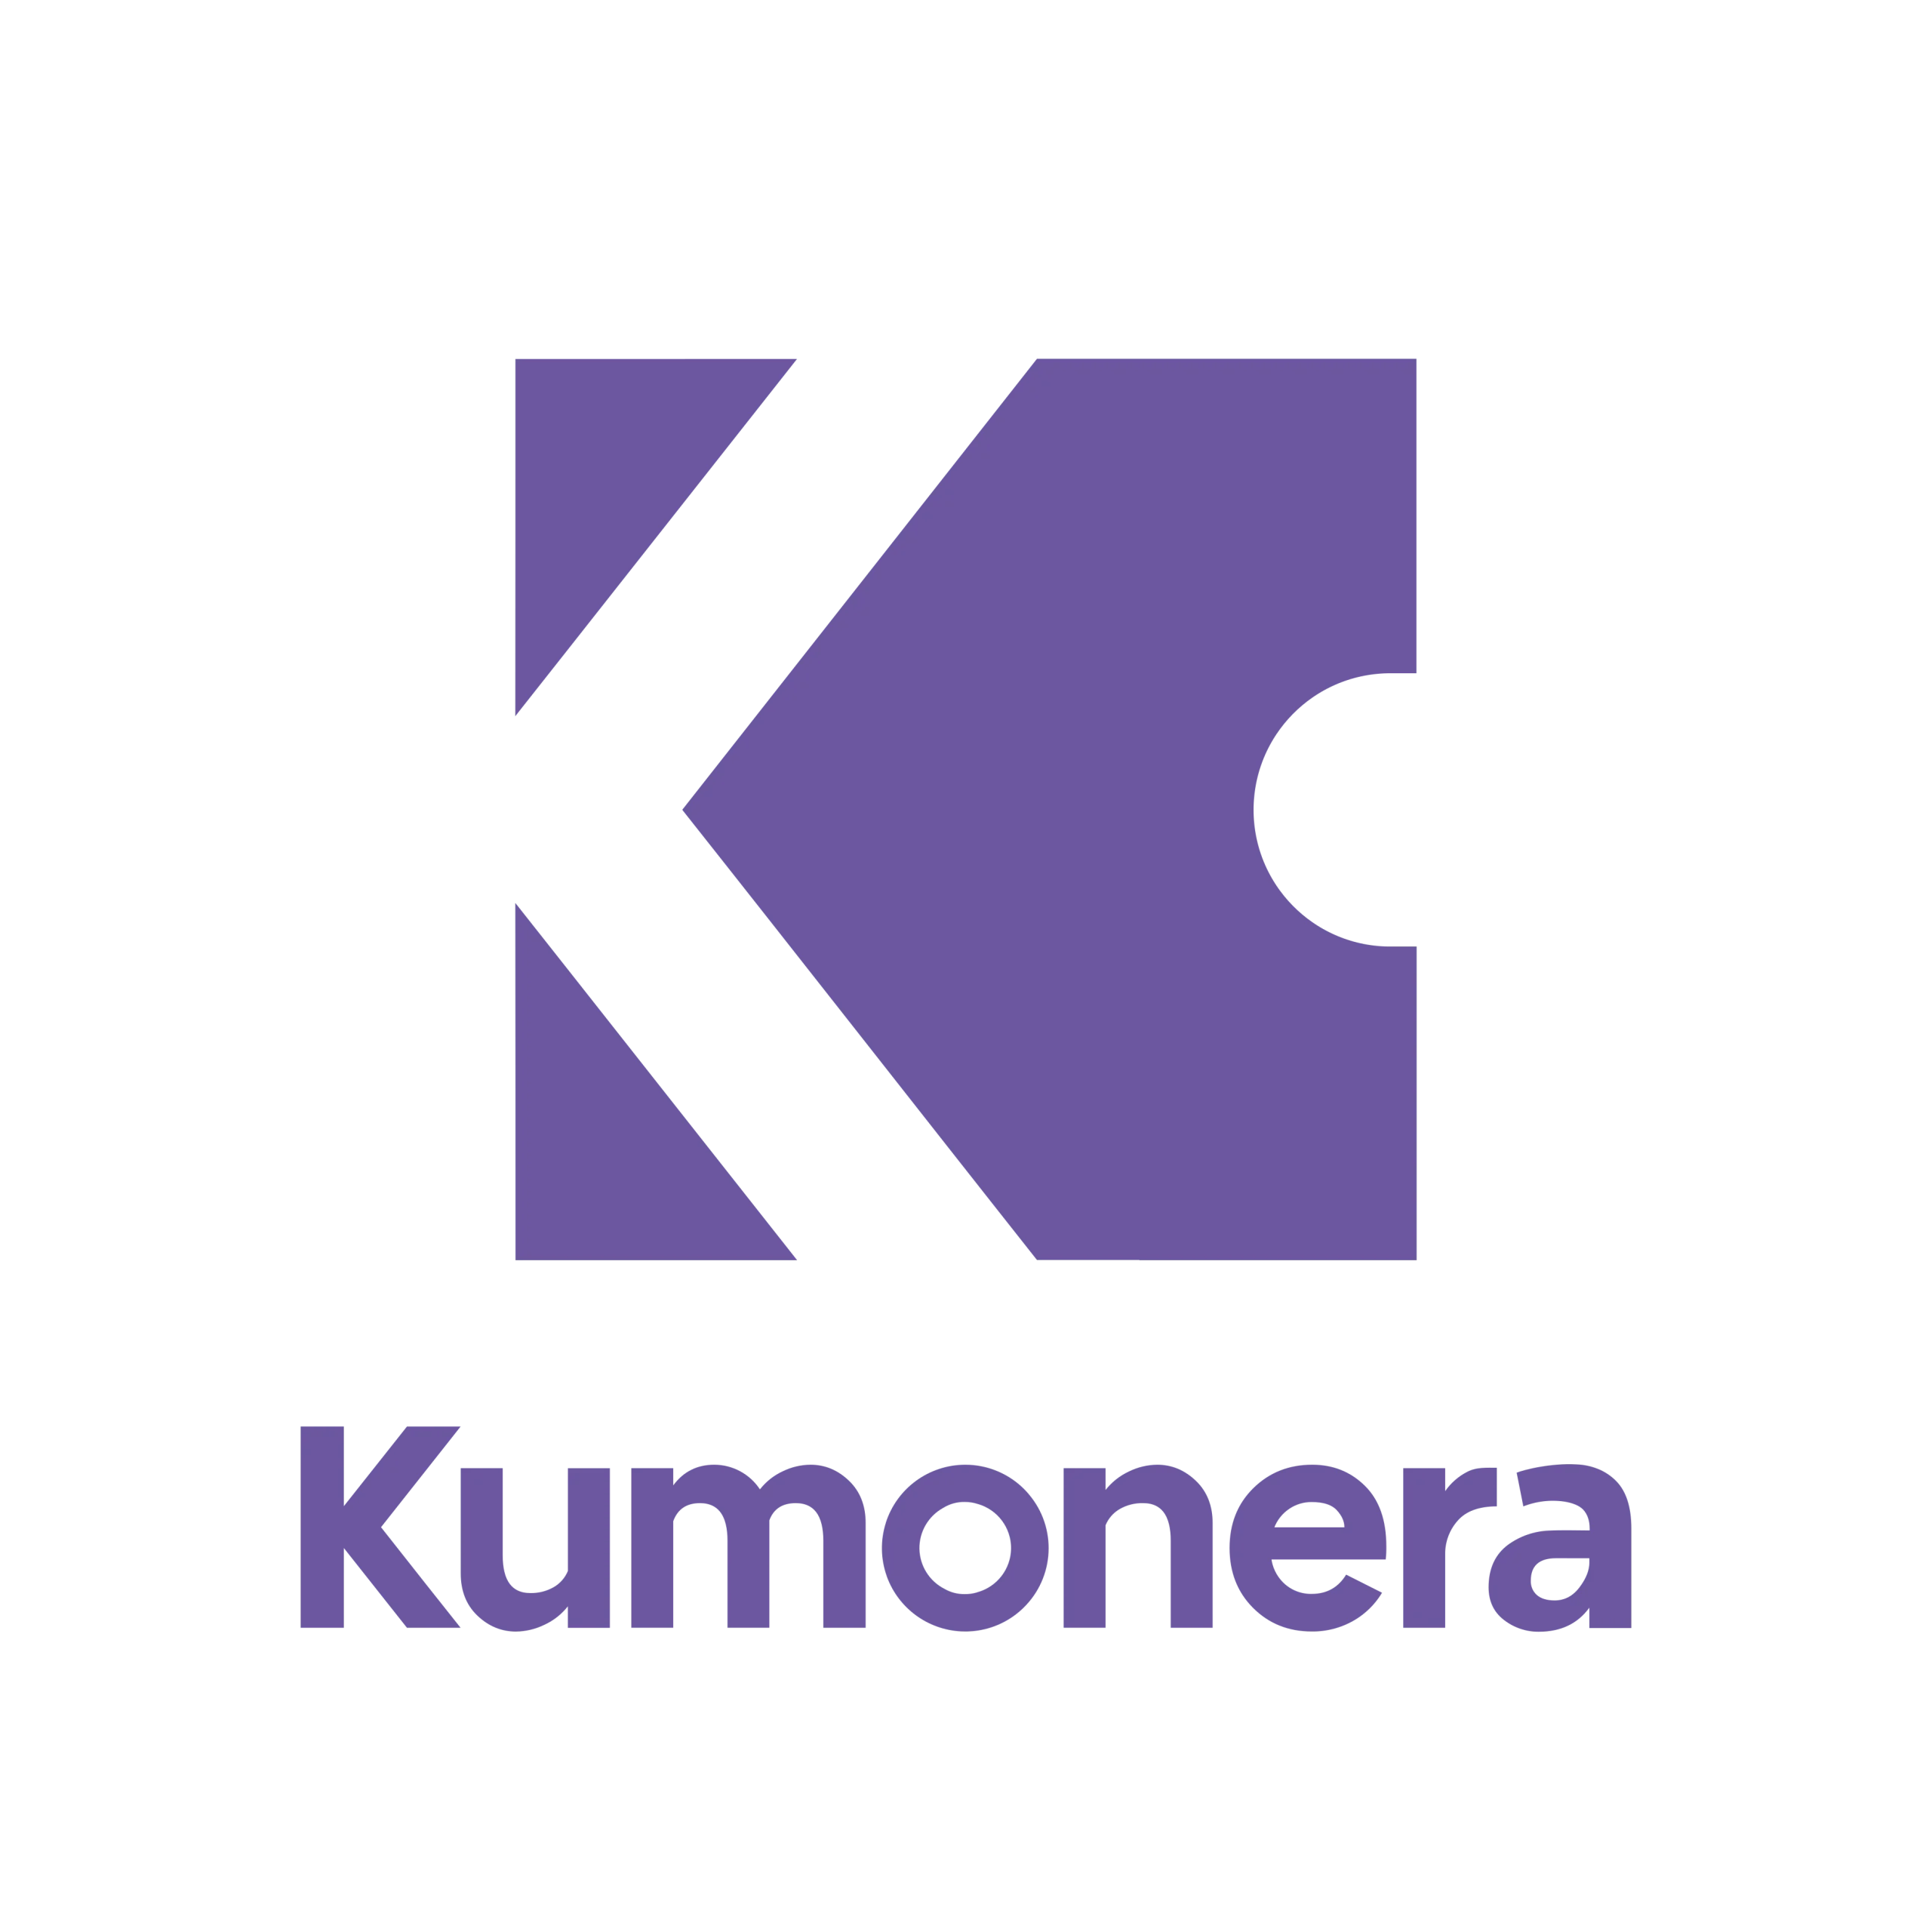 (c) Kumonera.com